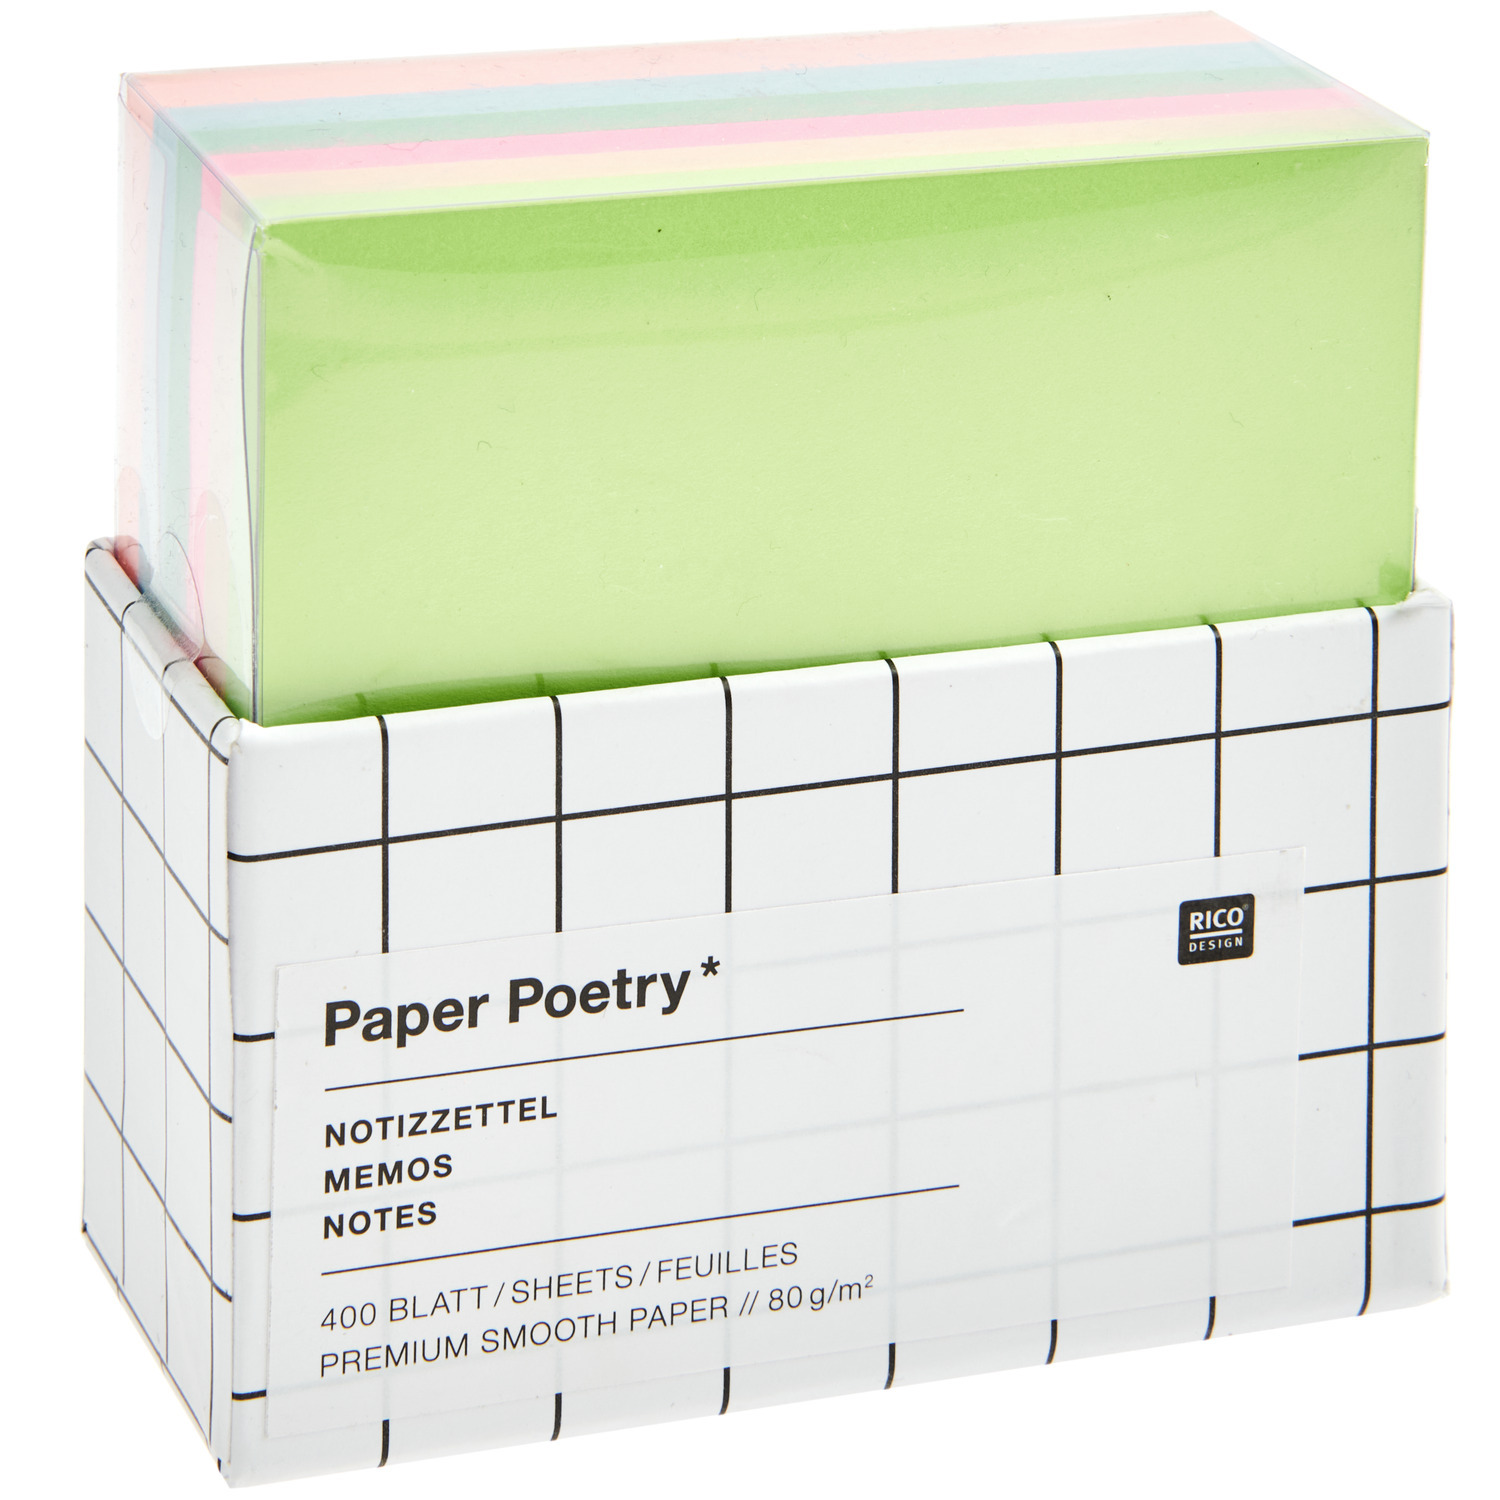 Paper Poetry Notizzettel-Box pink, türkis, gelb 